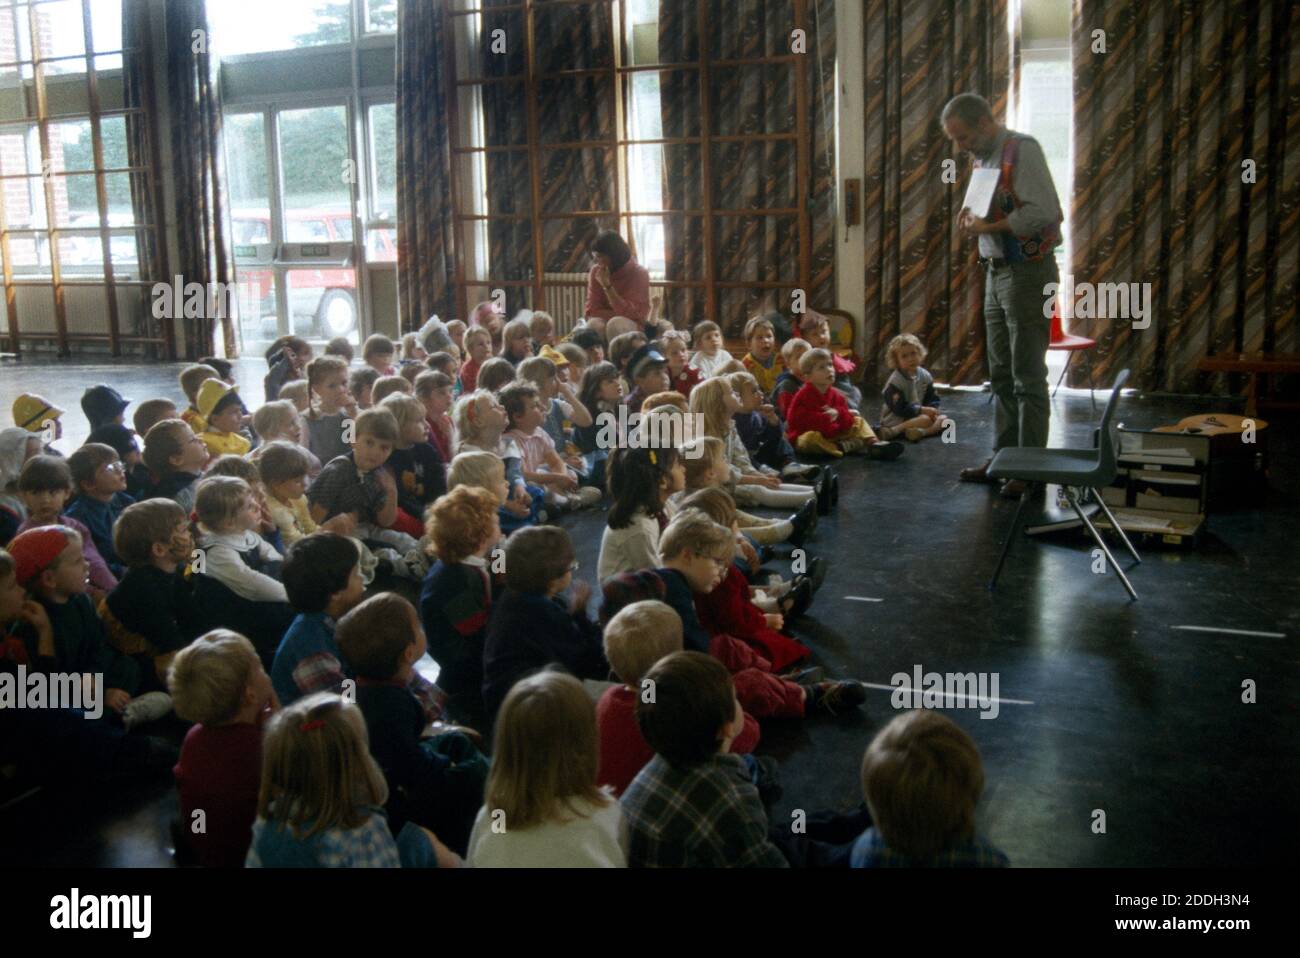 Surrey England Robin Mellar Poet Speaking to Children in School Assembly Hall Stock Photo